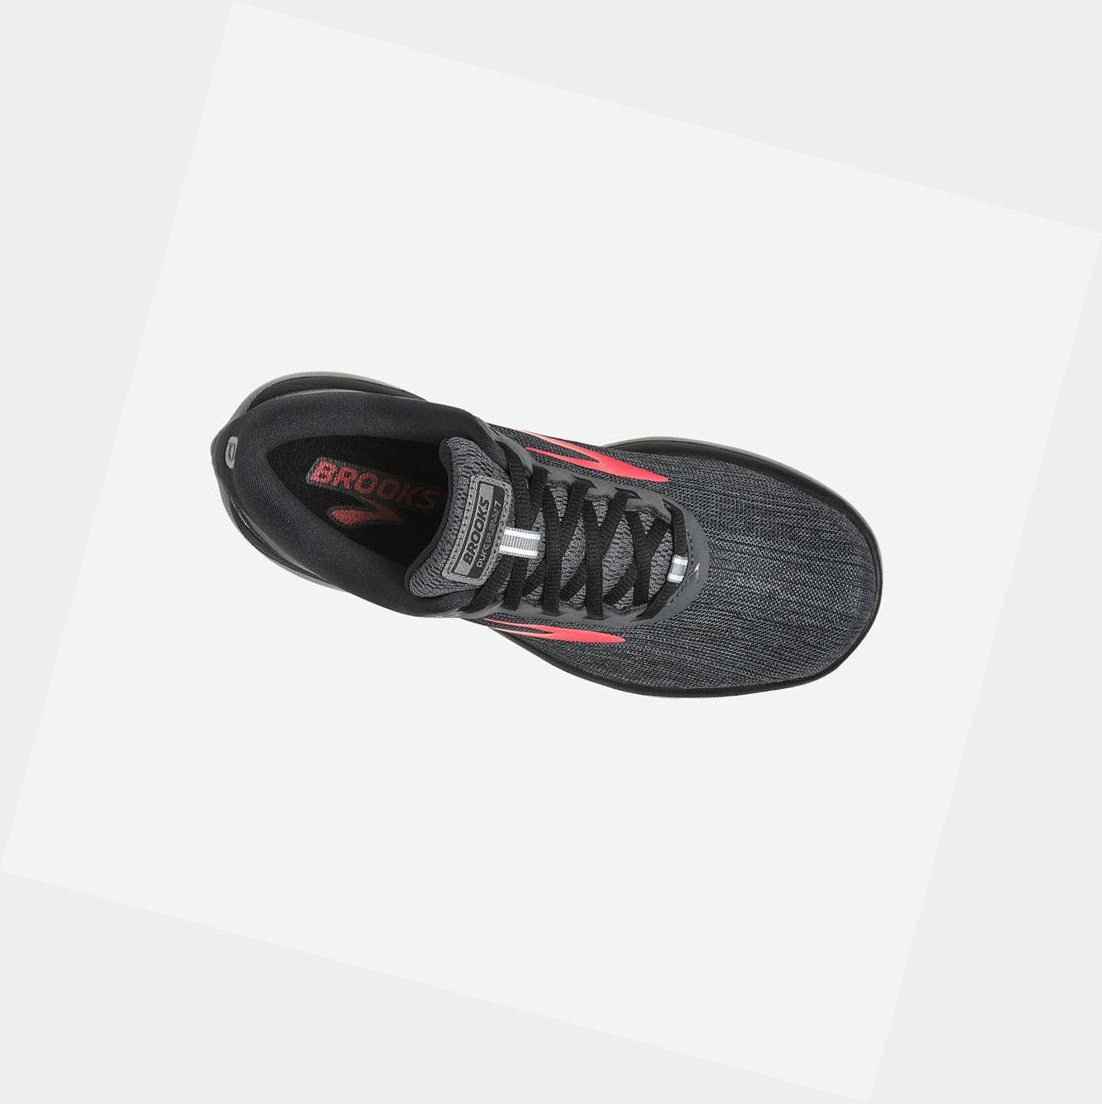 Brooks PureFlow 7 Women's Road Running Shoes Black / Ebony / Teaberry | BVCM-16539